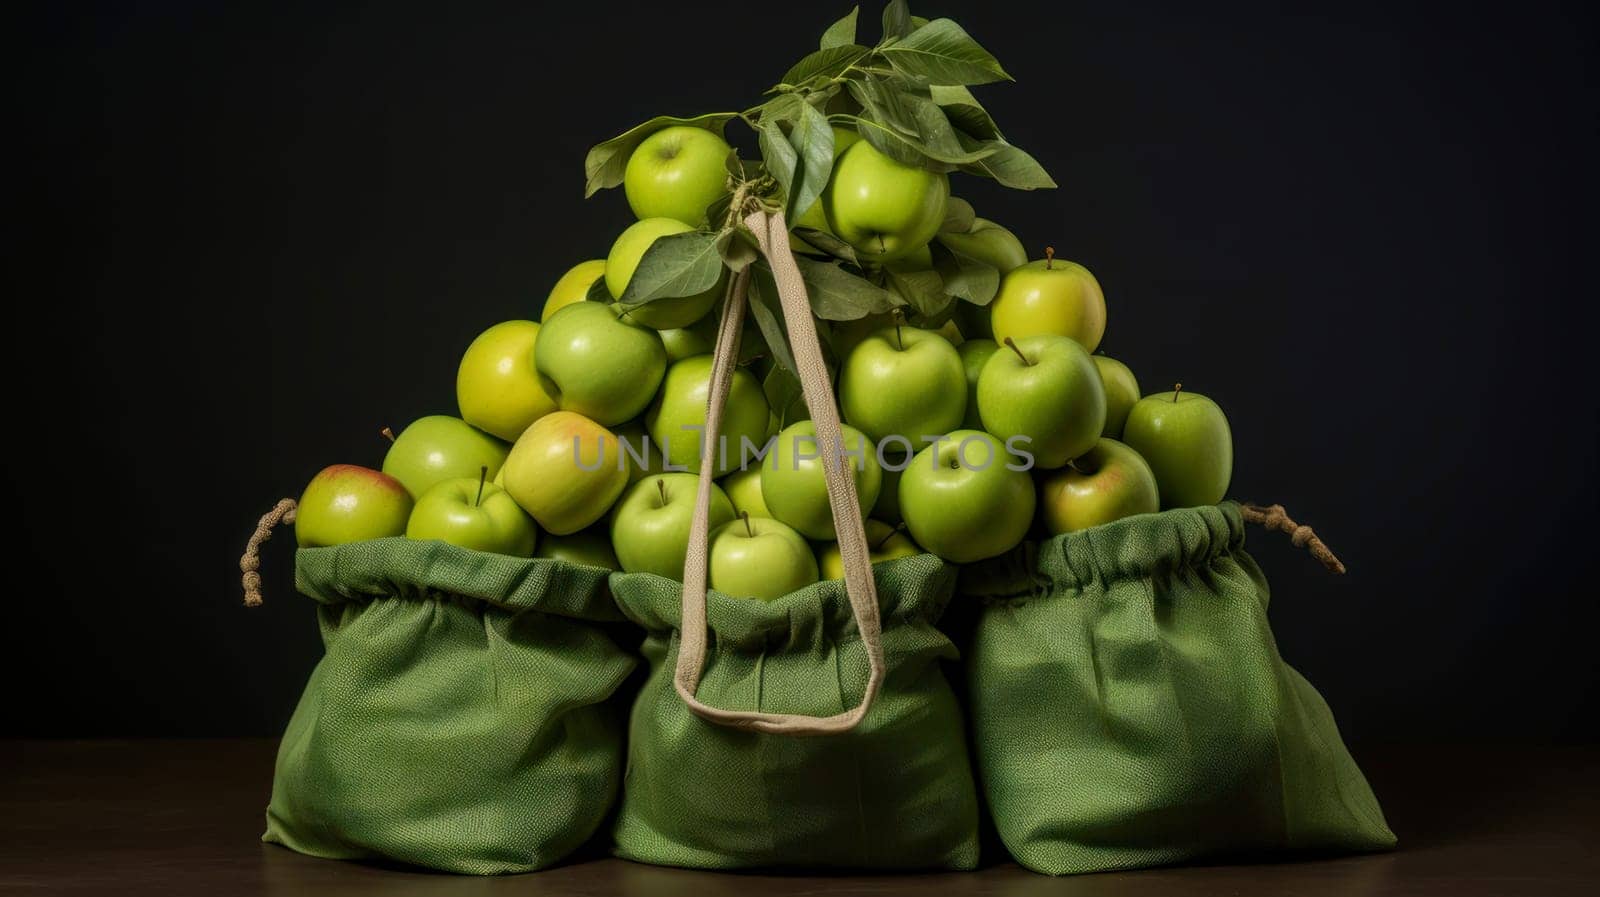 Bag made of natural fabric with green apples. by Alla_Yurtayeva